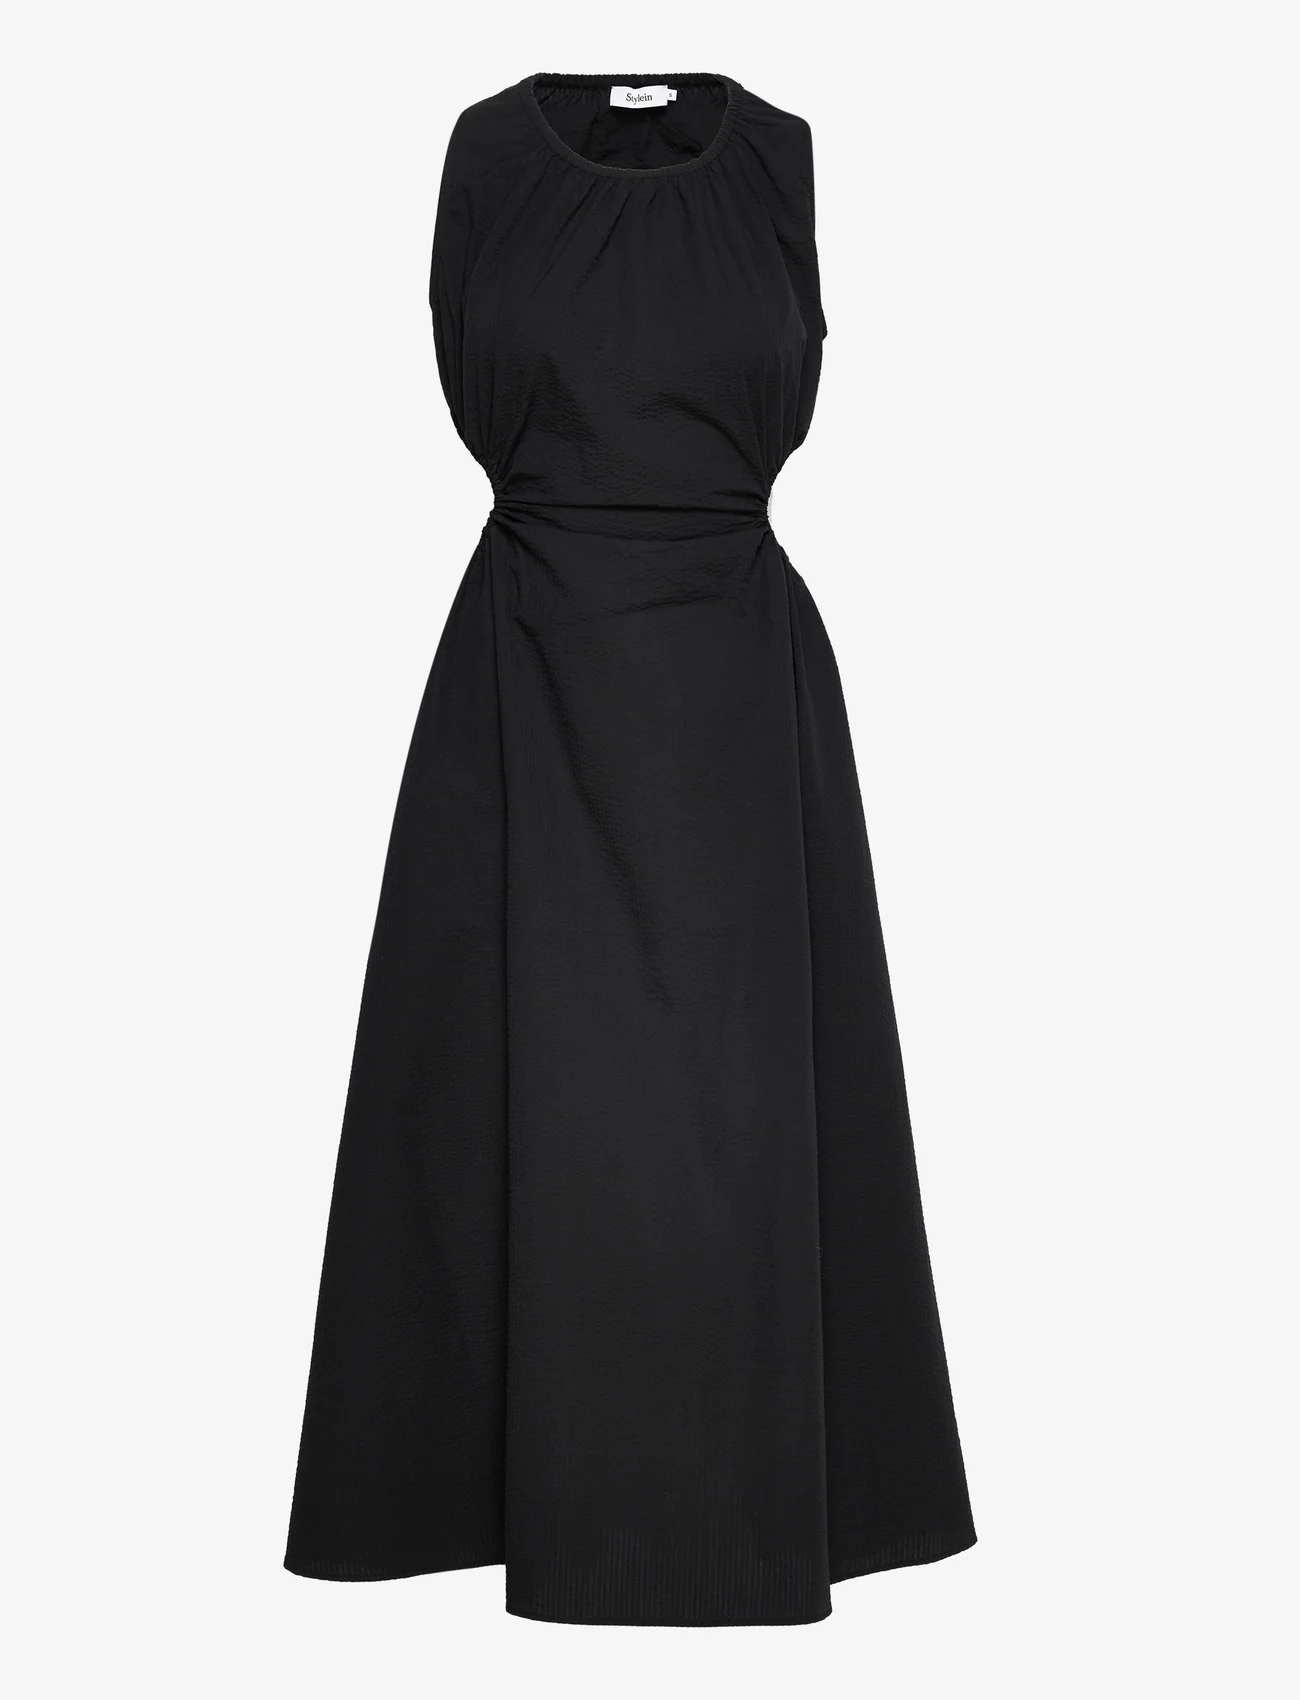 Stylein - MYTRA DRESS - feestelijke kleding voor outlet-prijzen - black - 0